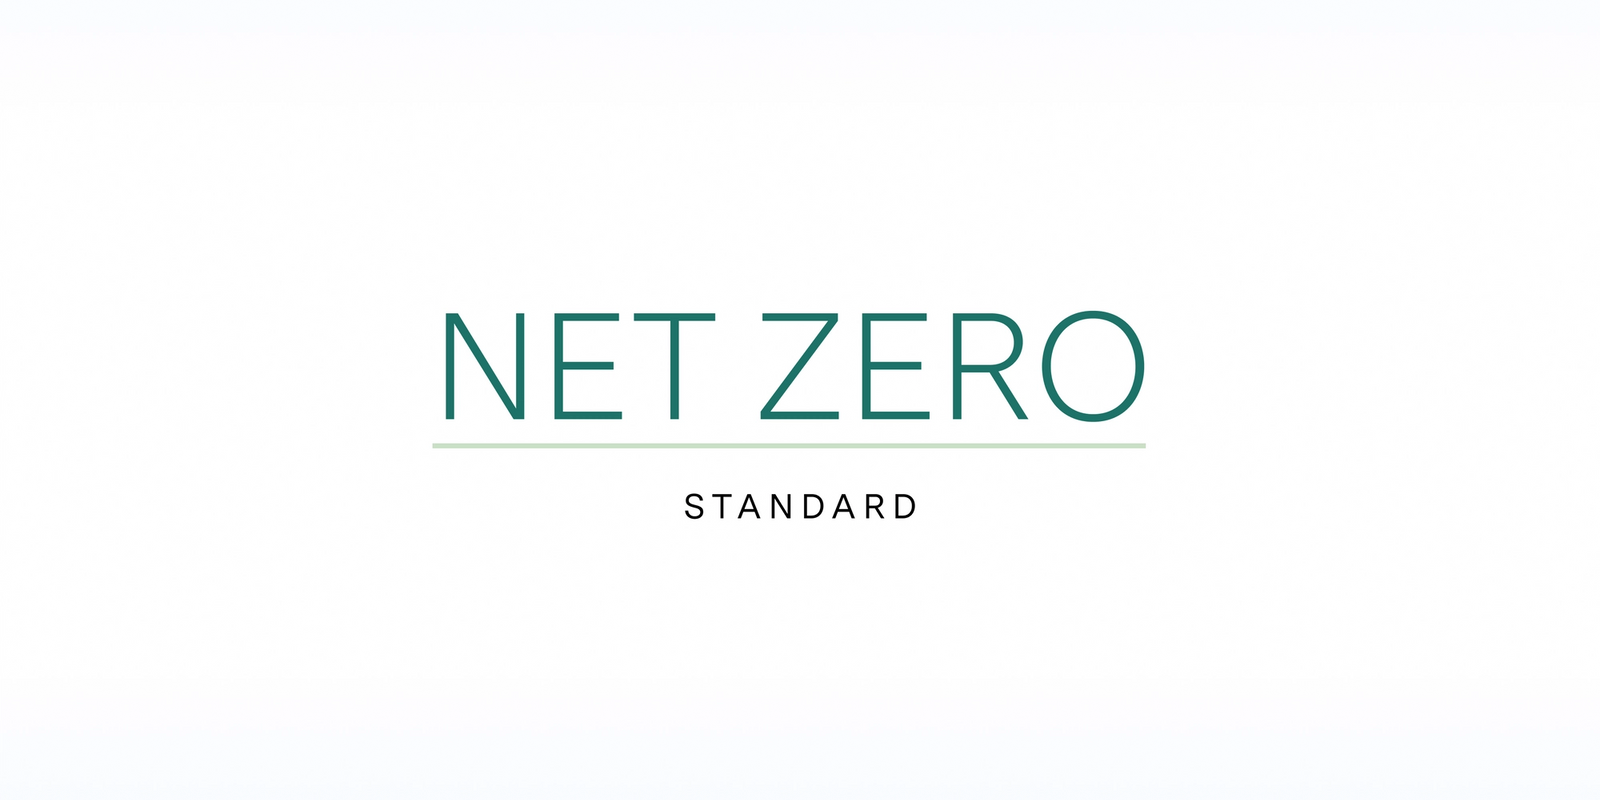 Net Zero standard